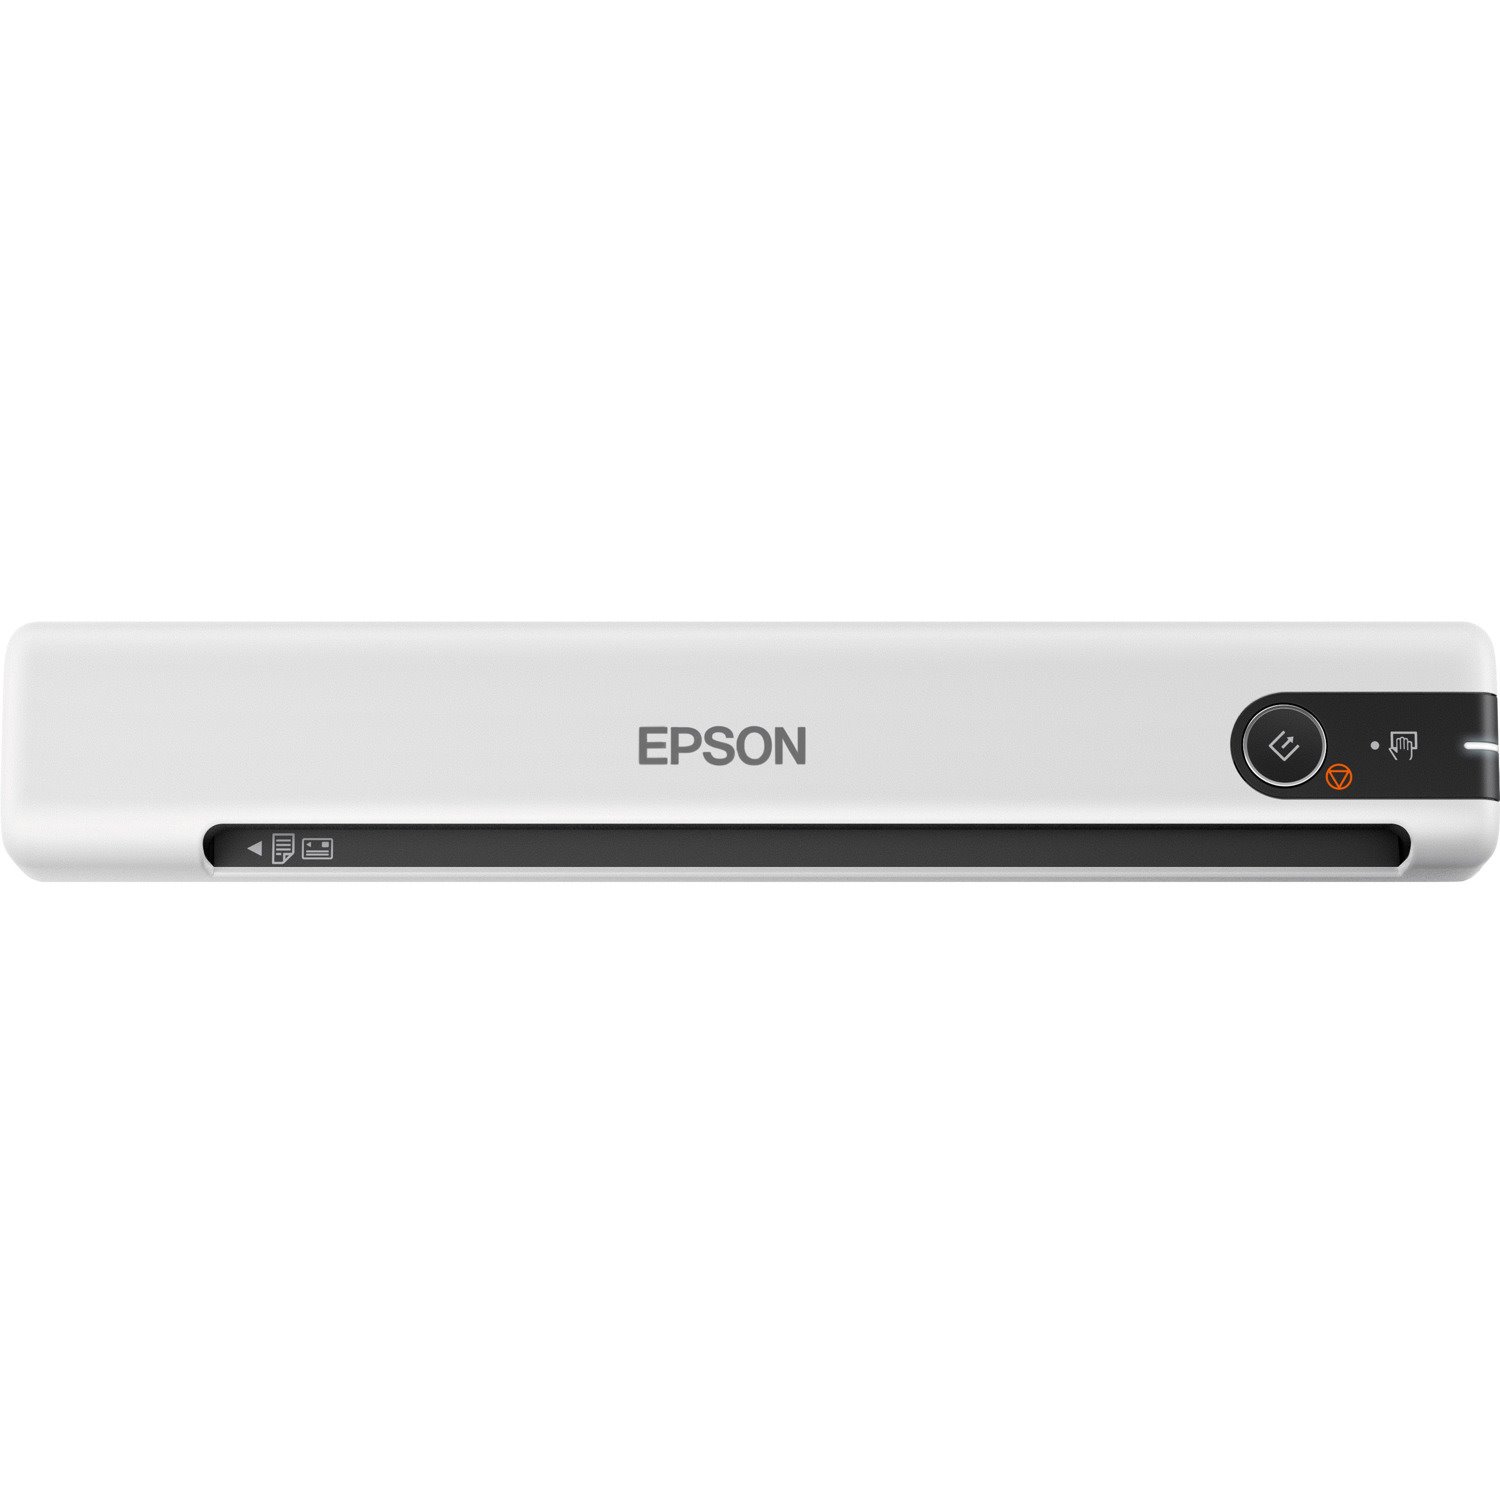 Epson DS-70 Sheetfed Scanner - 600 dpi Optical